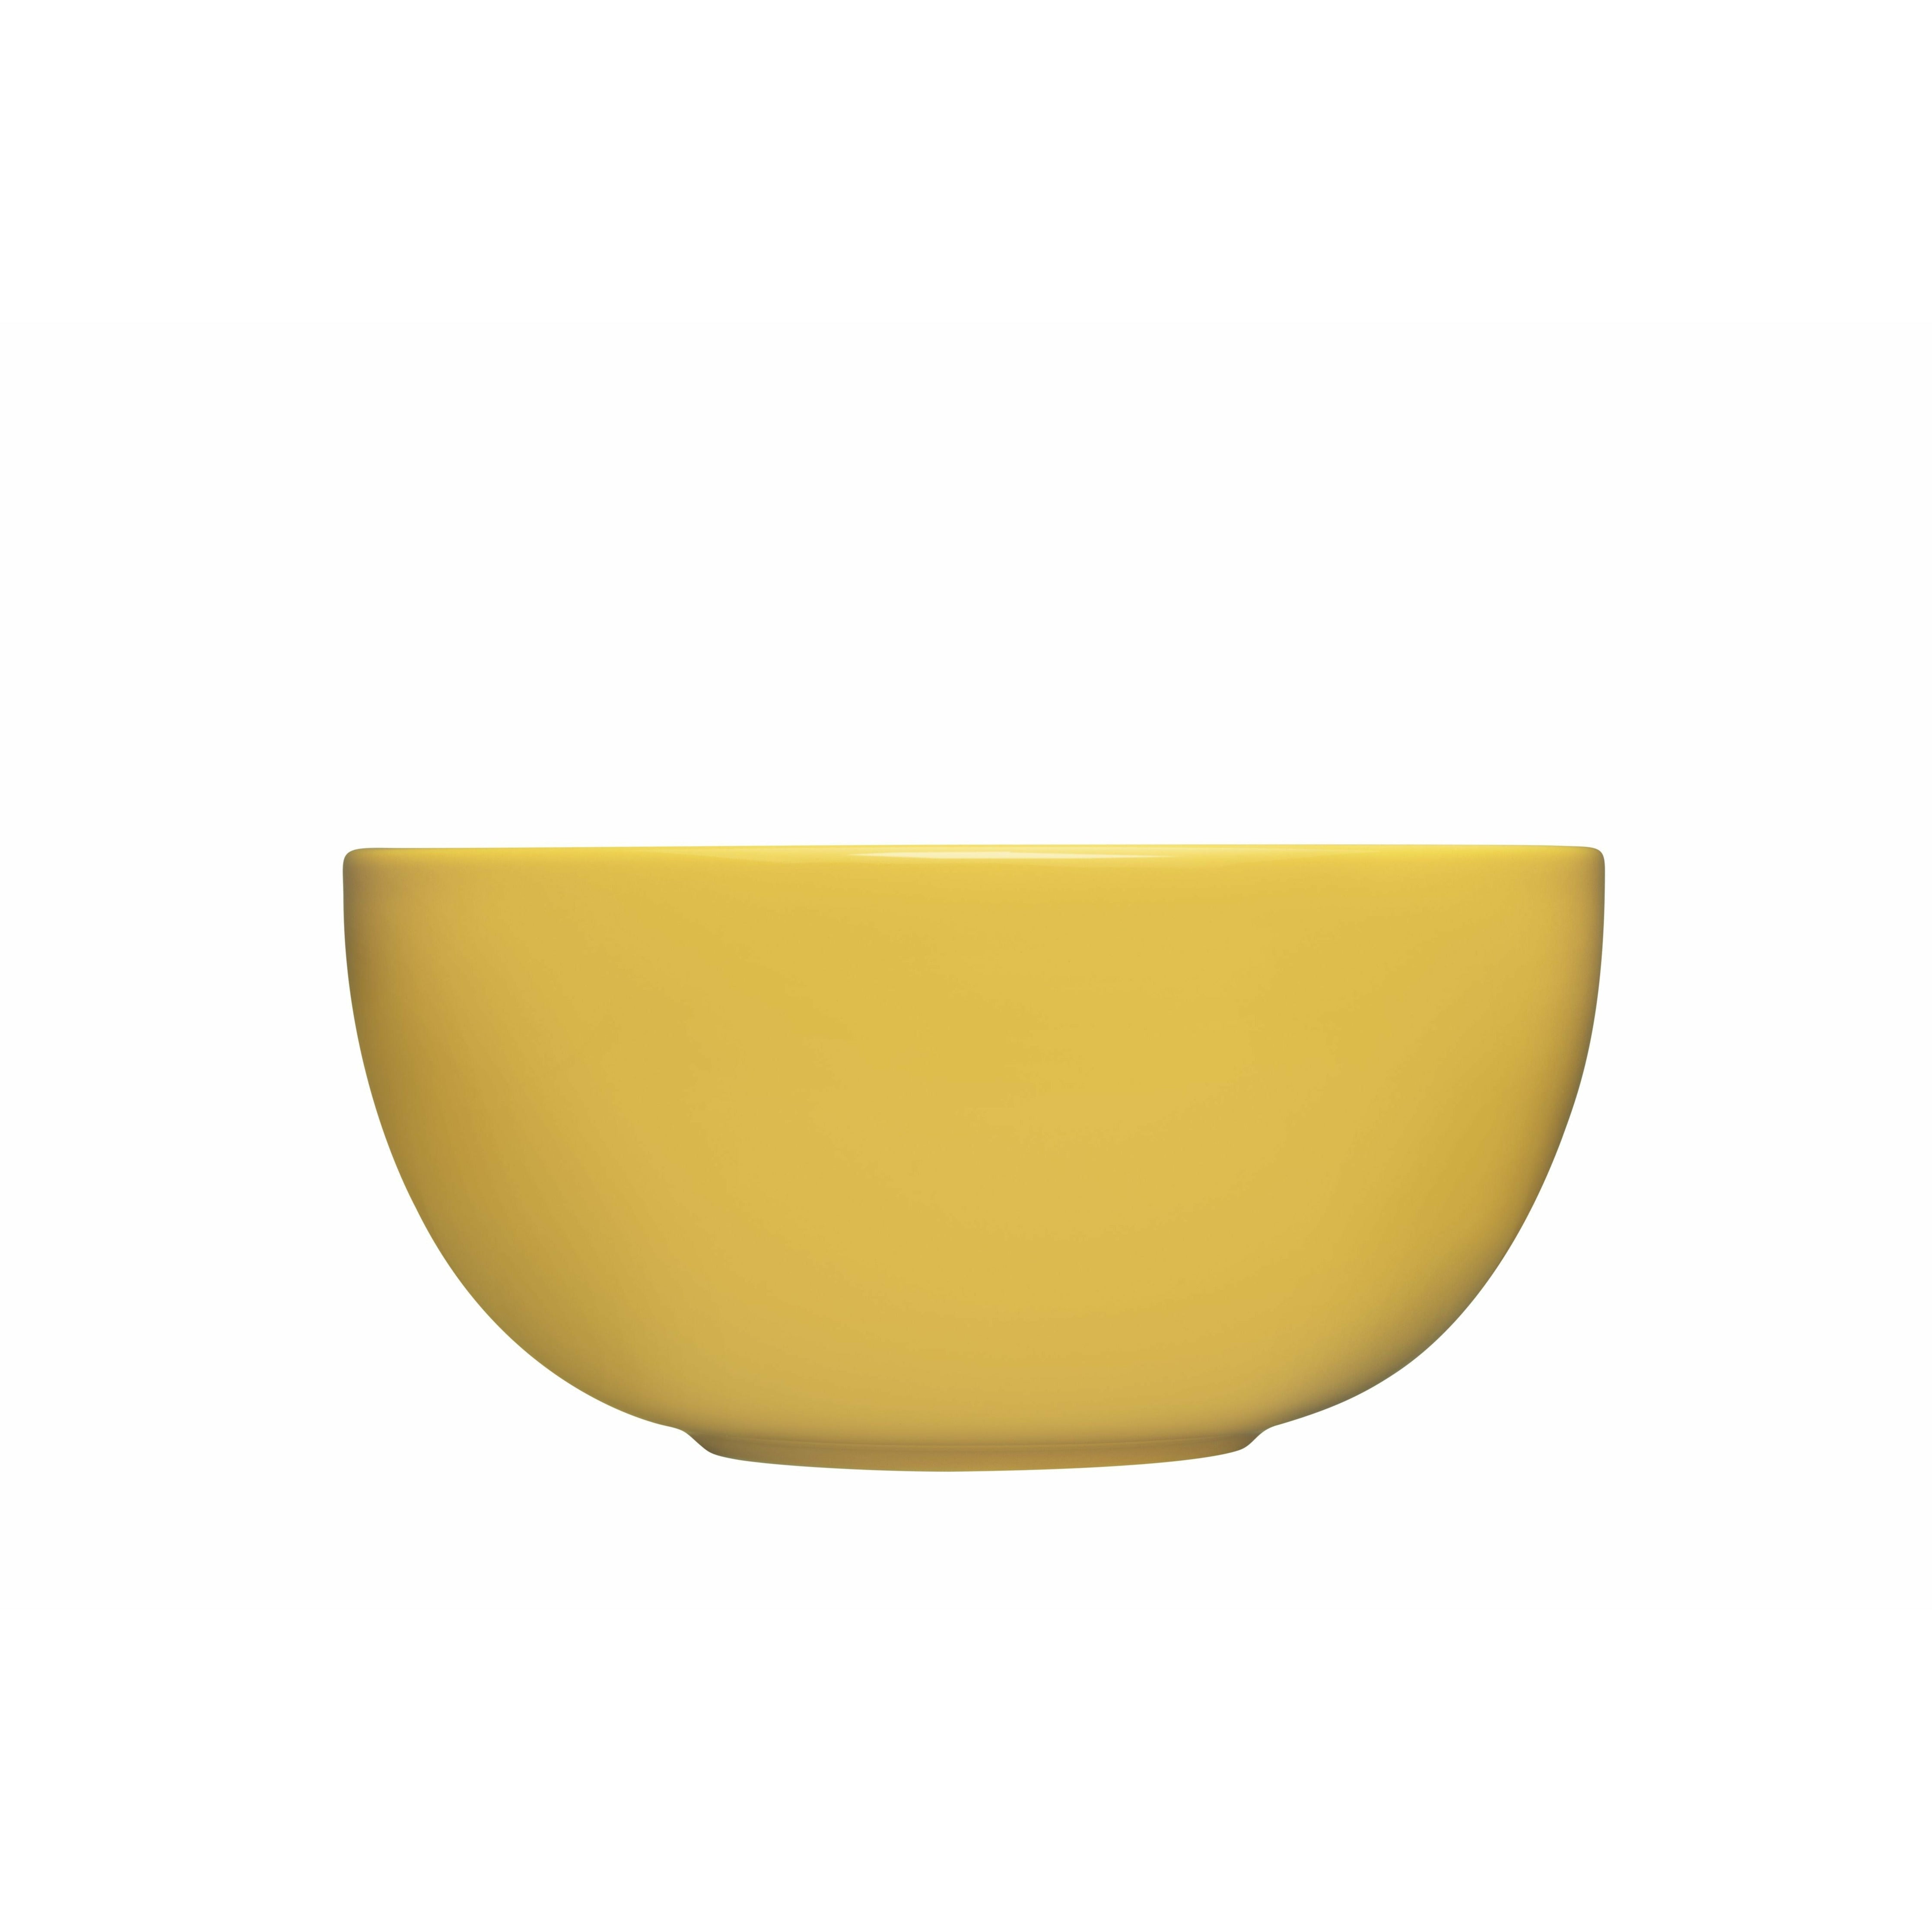 Iittala teema bowl 3,4 l, perfeccionando amarillo